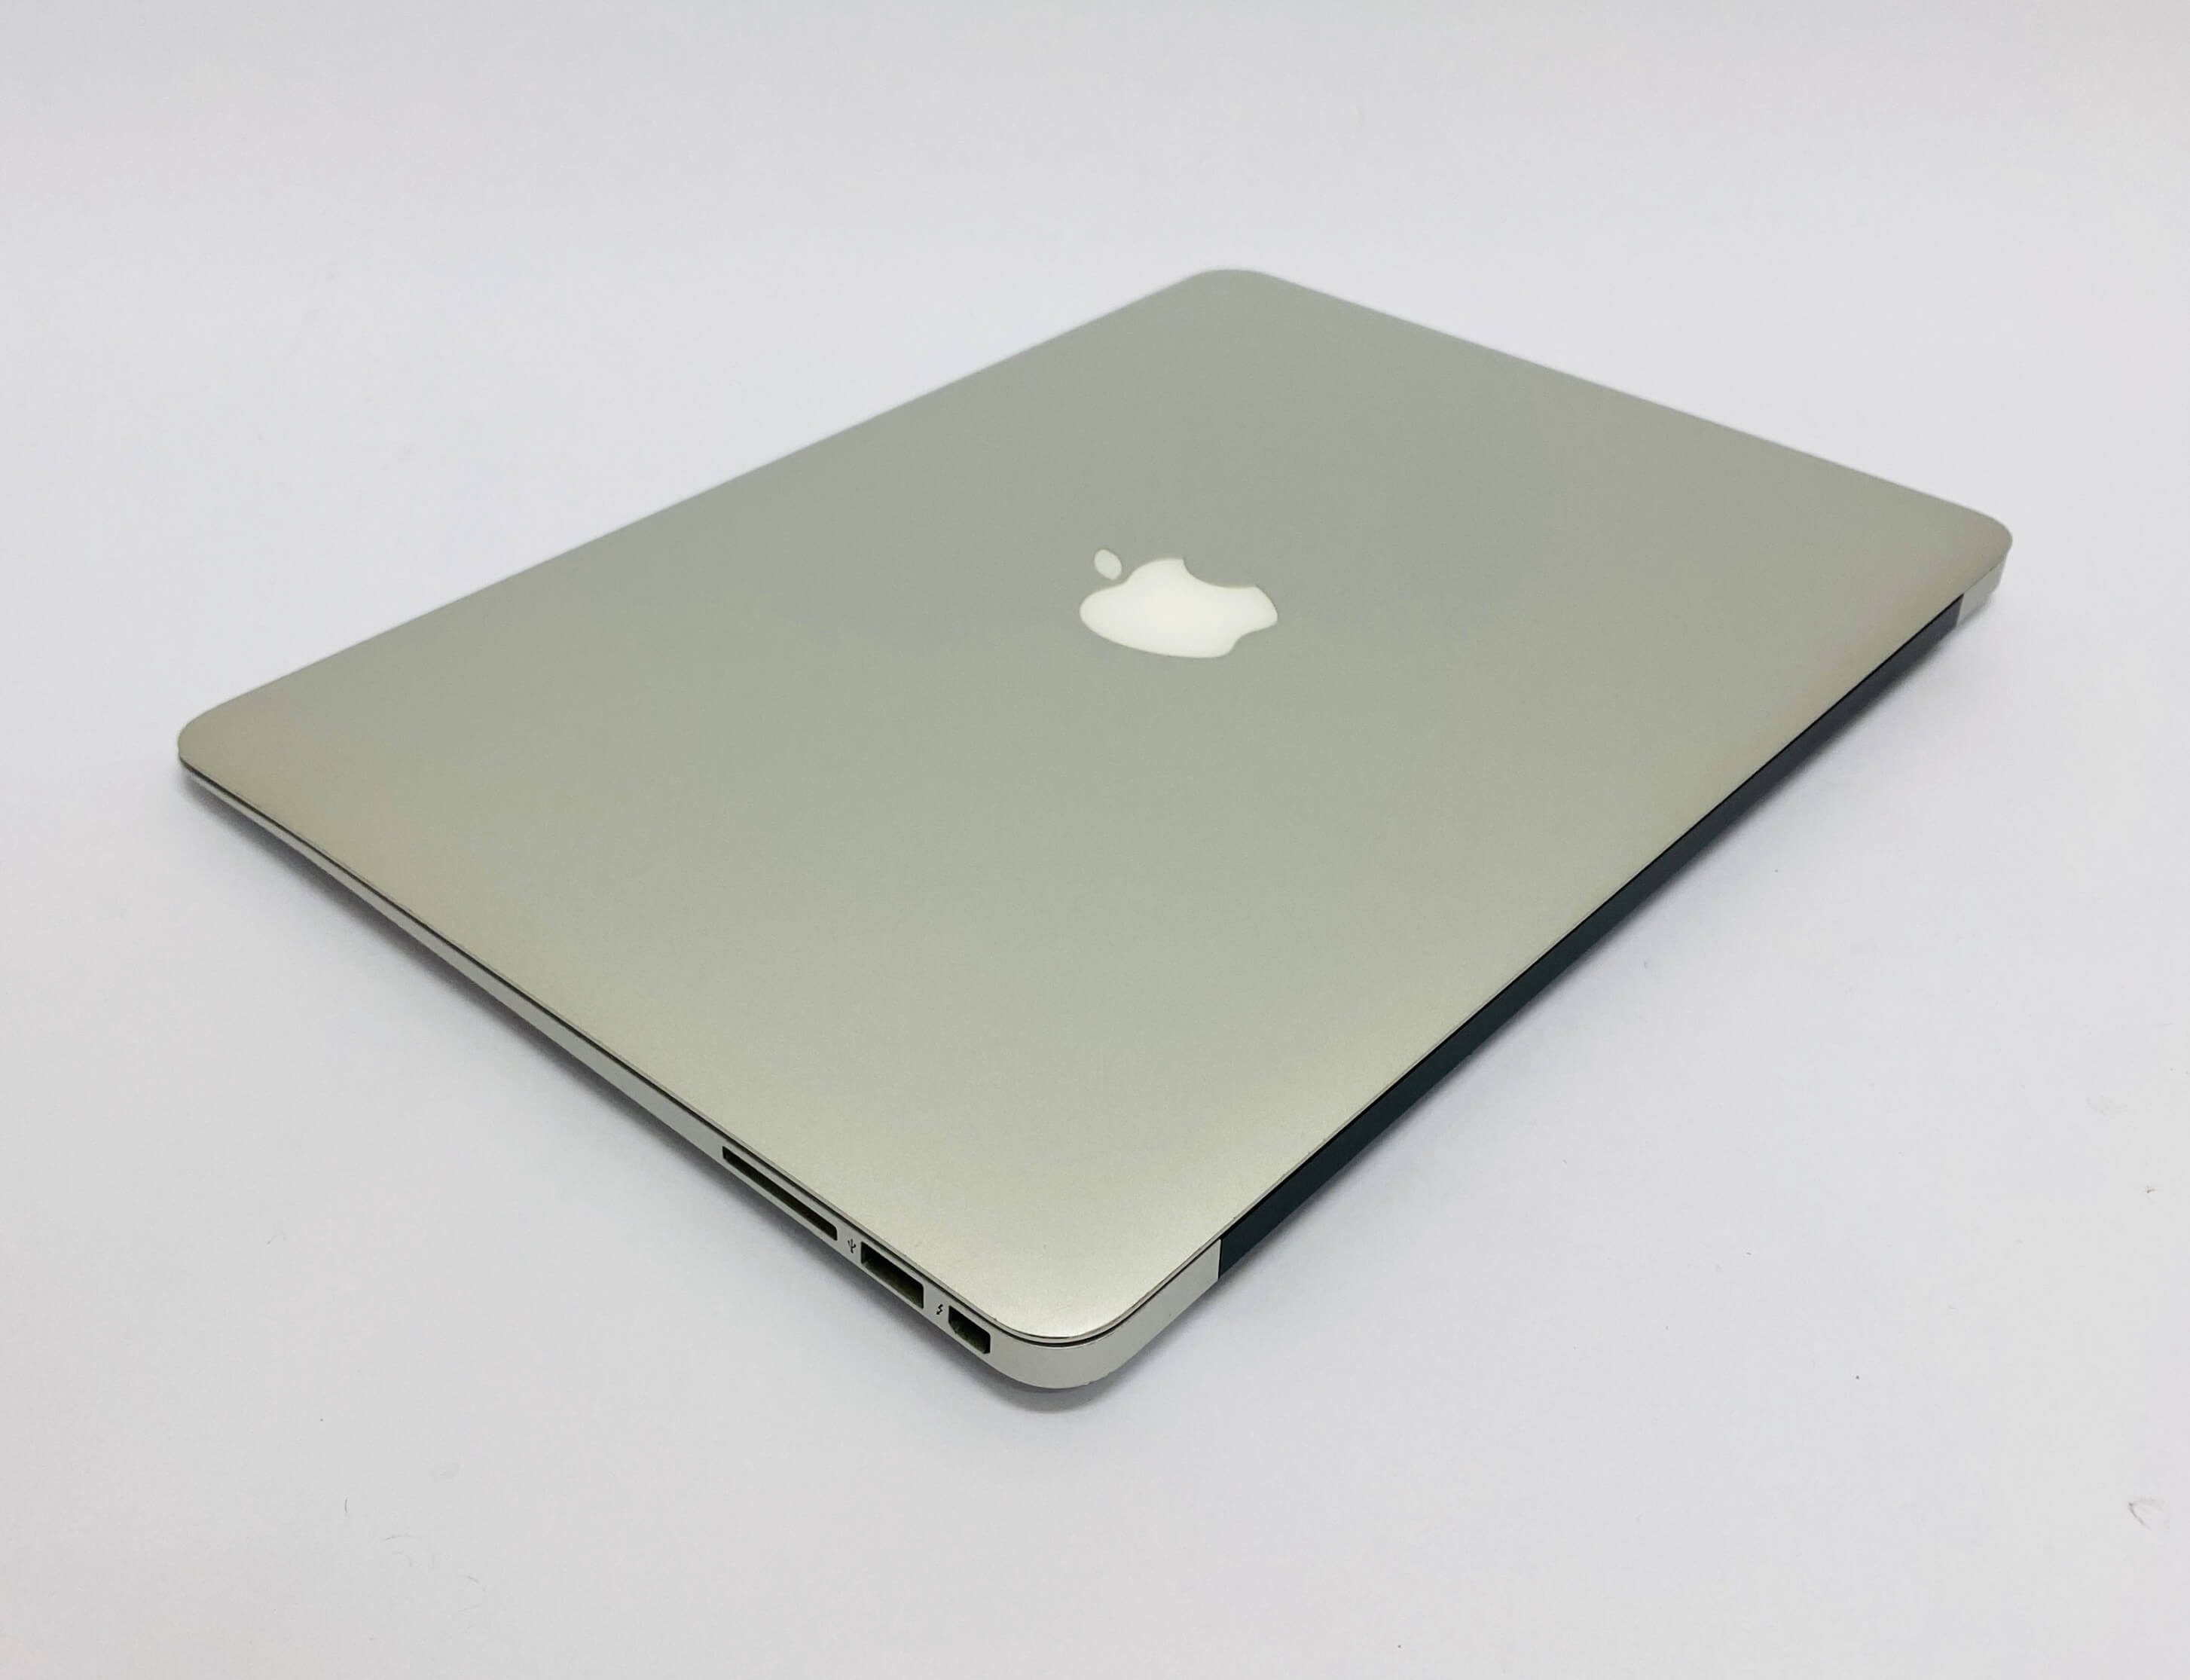 MacBook Air 13’’, i5, rok 2015, 4GB RAM, 128GB SSD